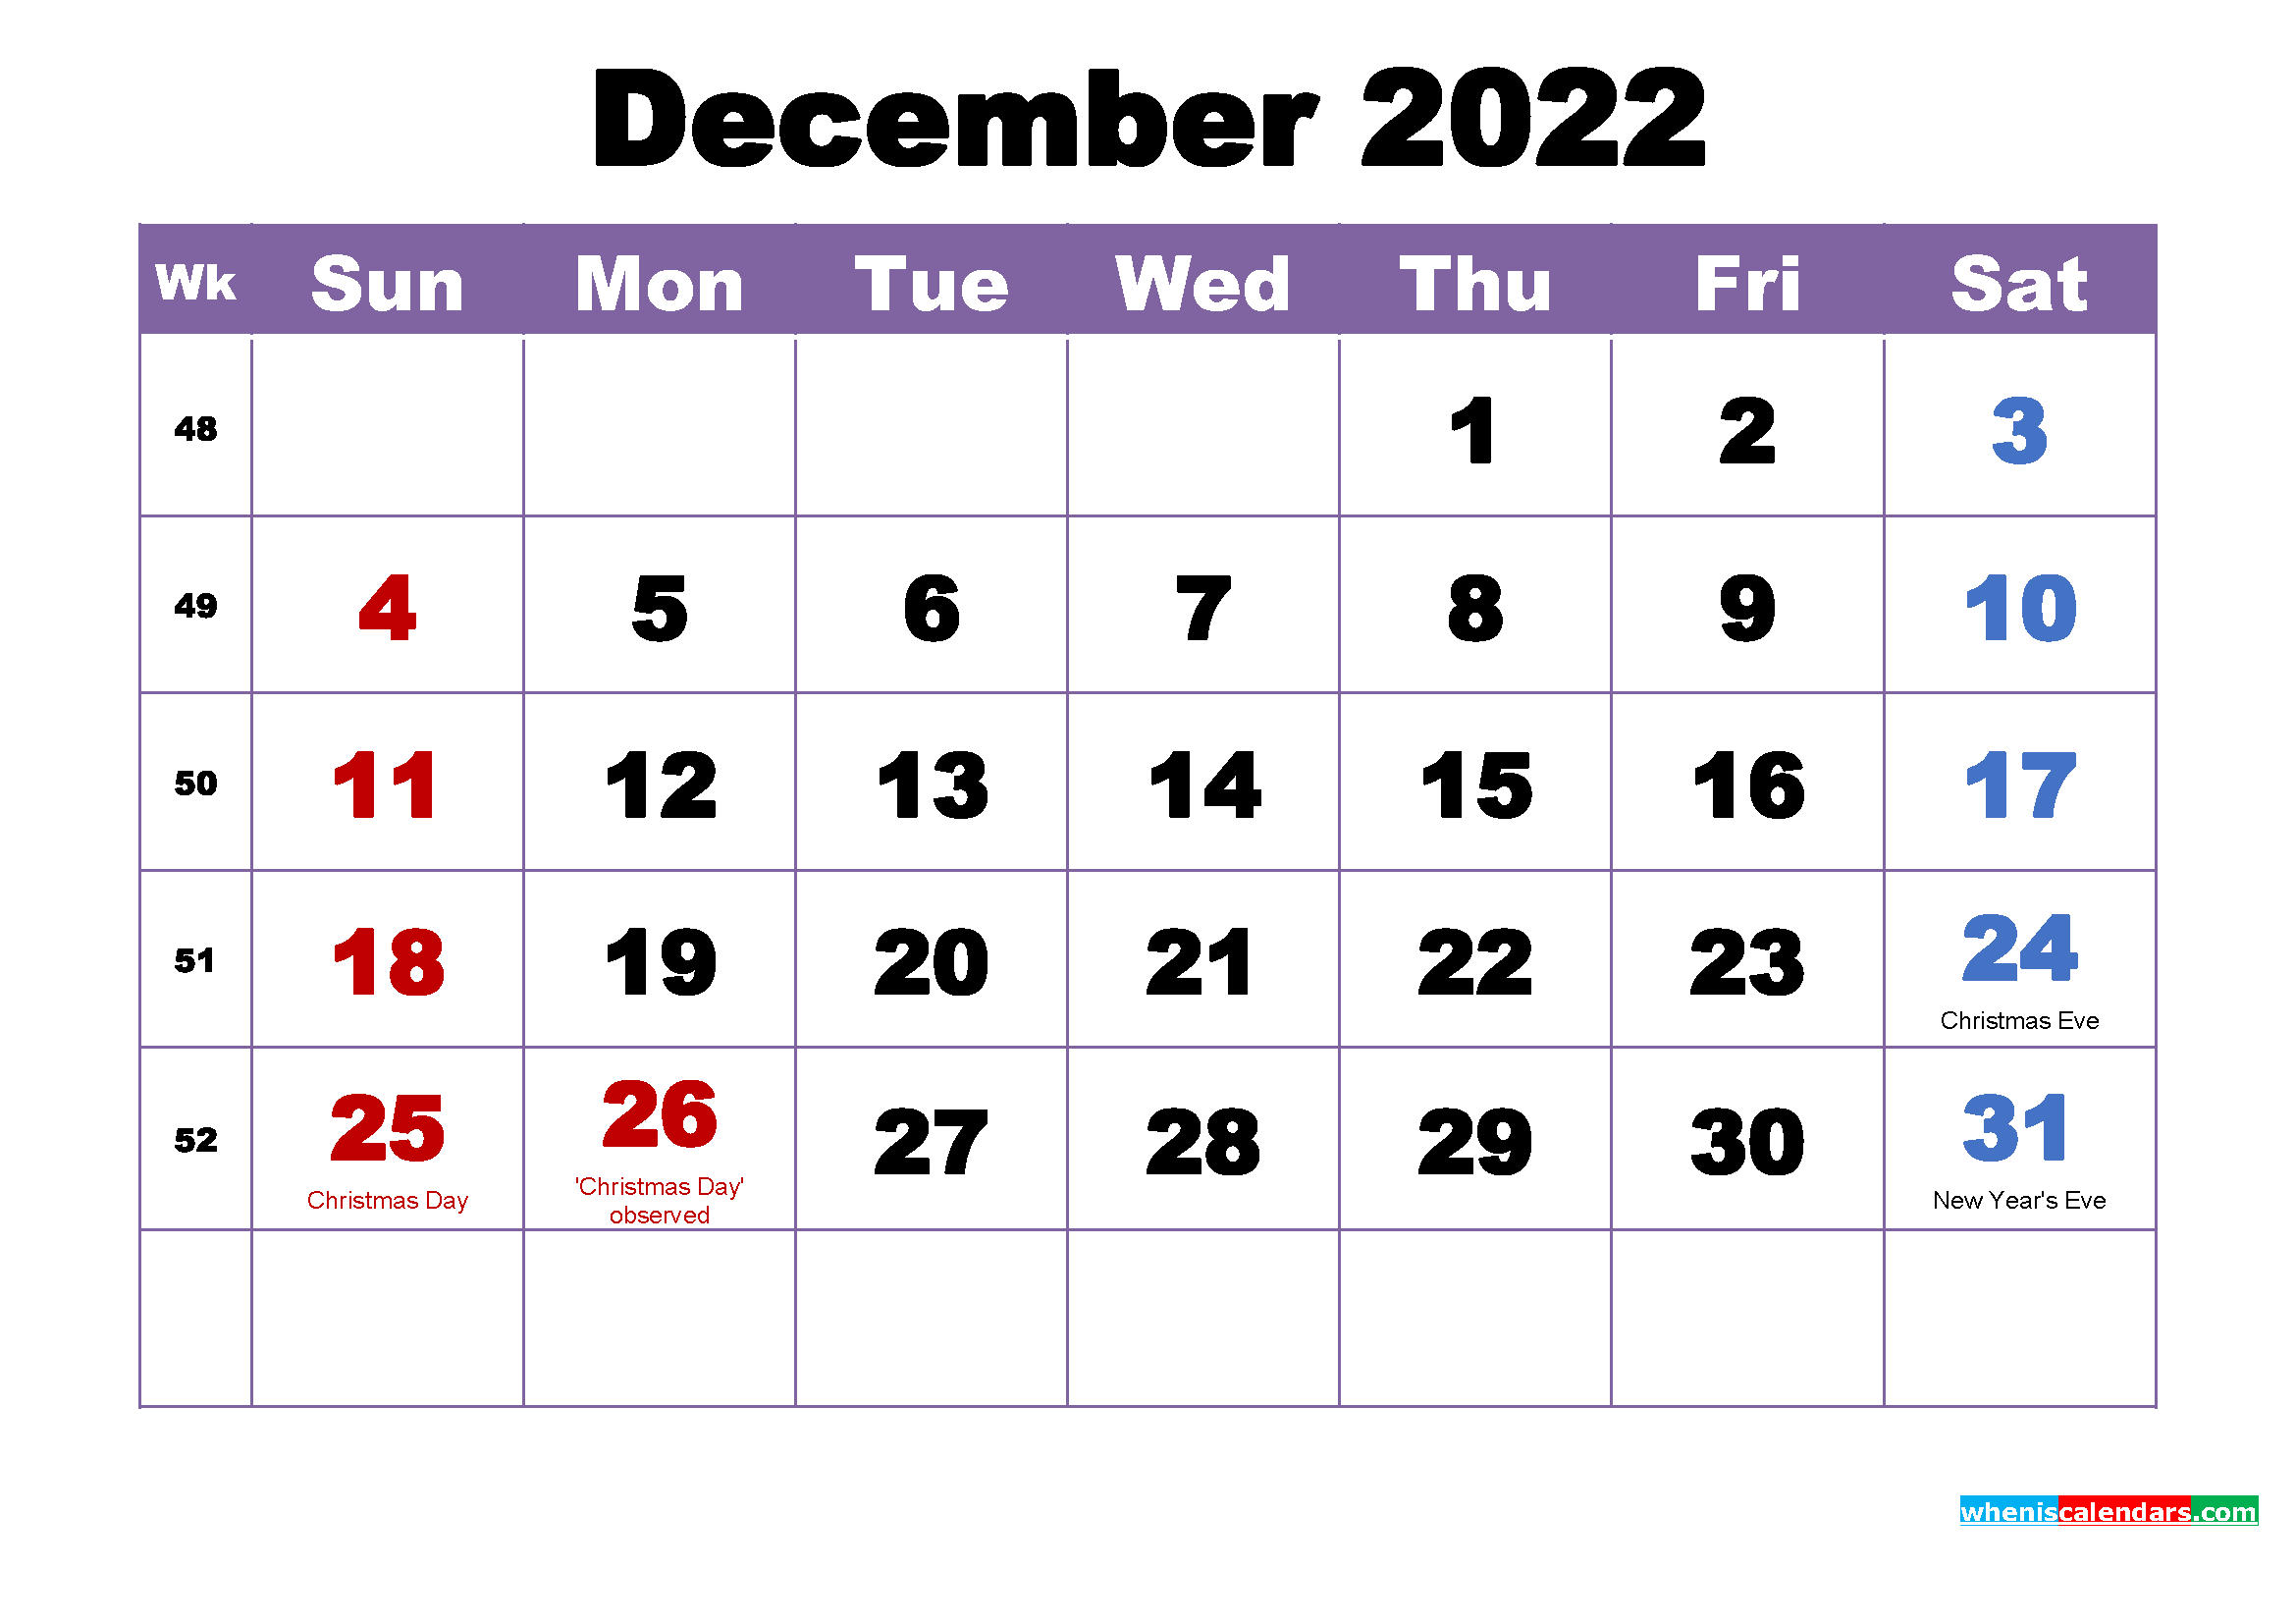 December 2022 Calendar Holidays Free December 2022 Calendar With Holidays Printable